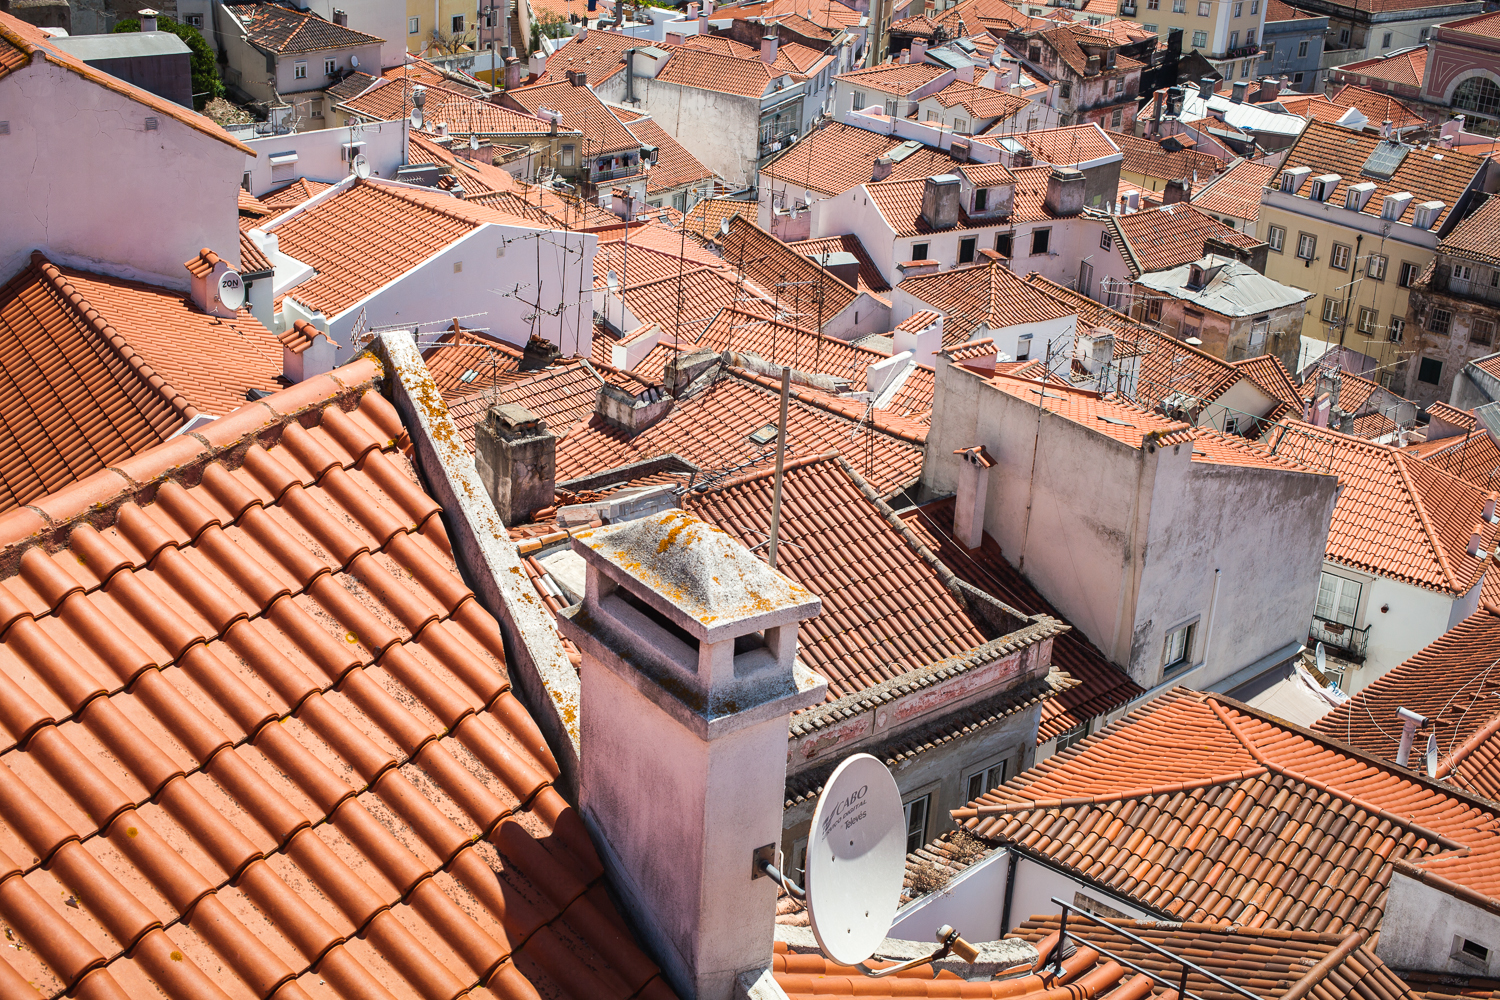  Rooftops of Alfama. Lisbon, Portugal 2015. 